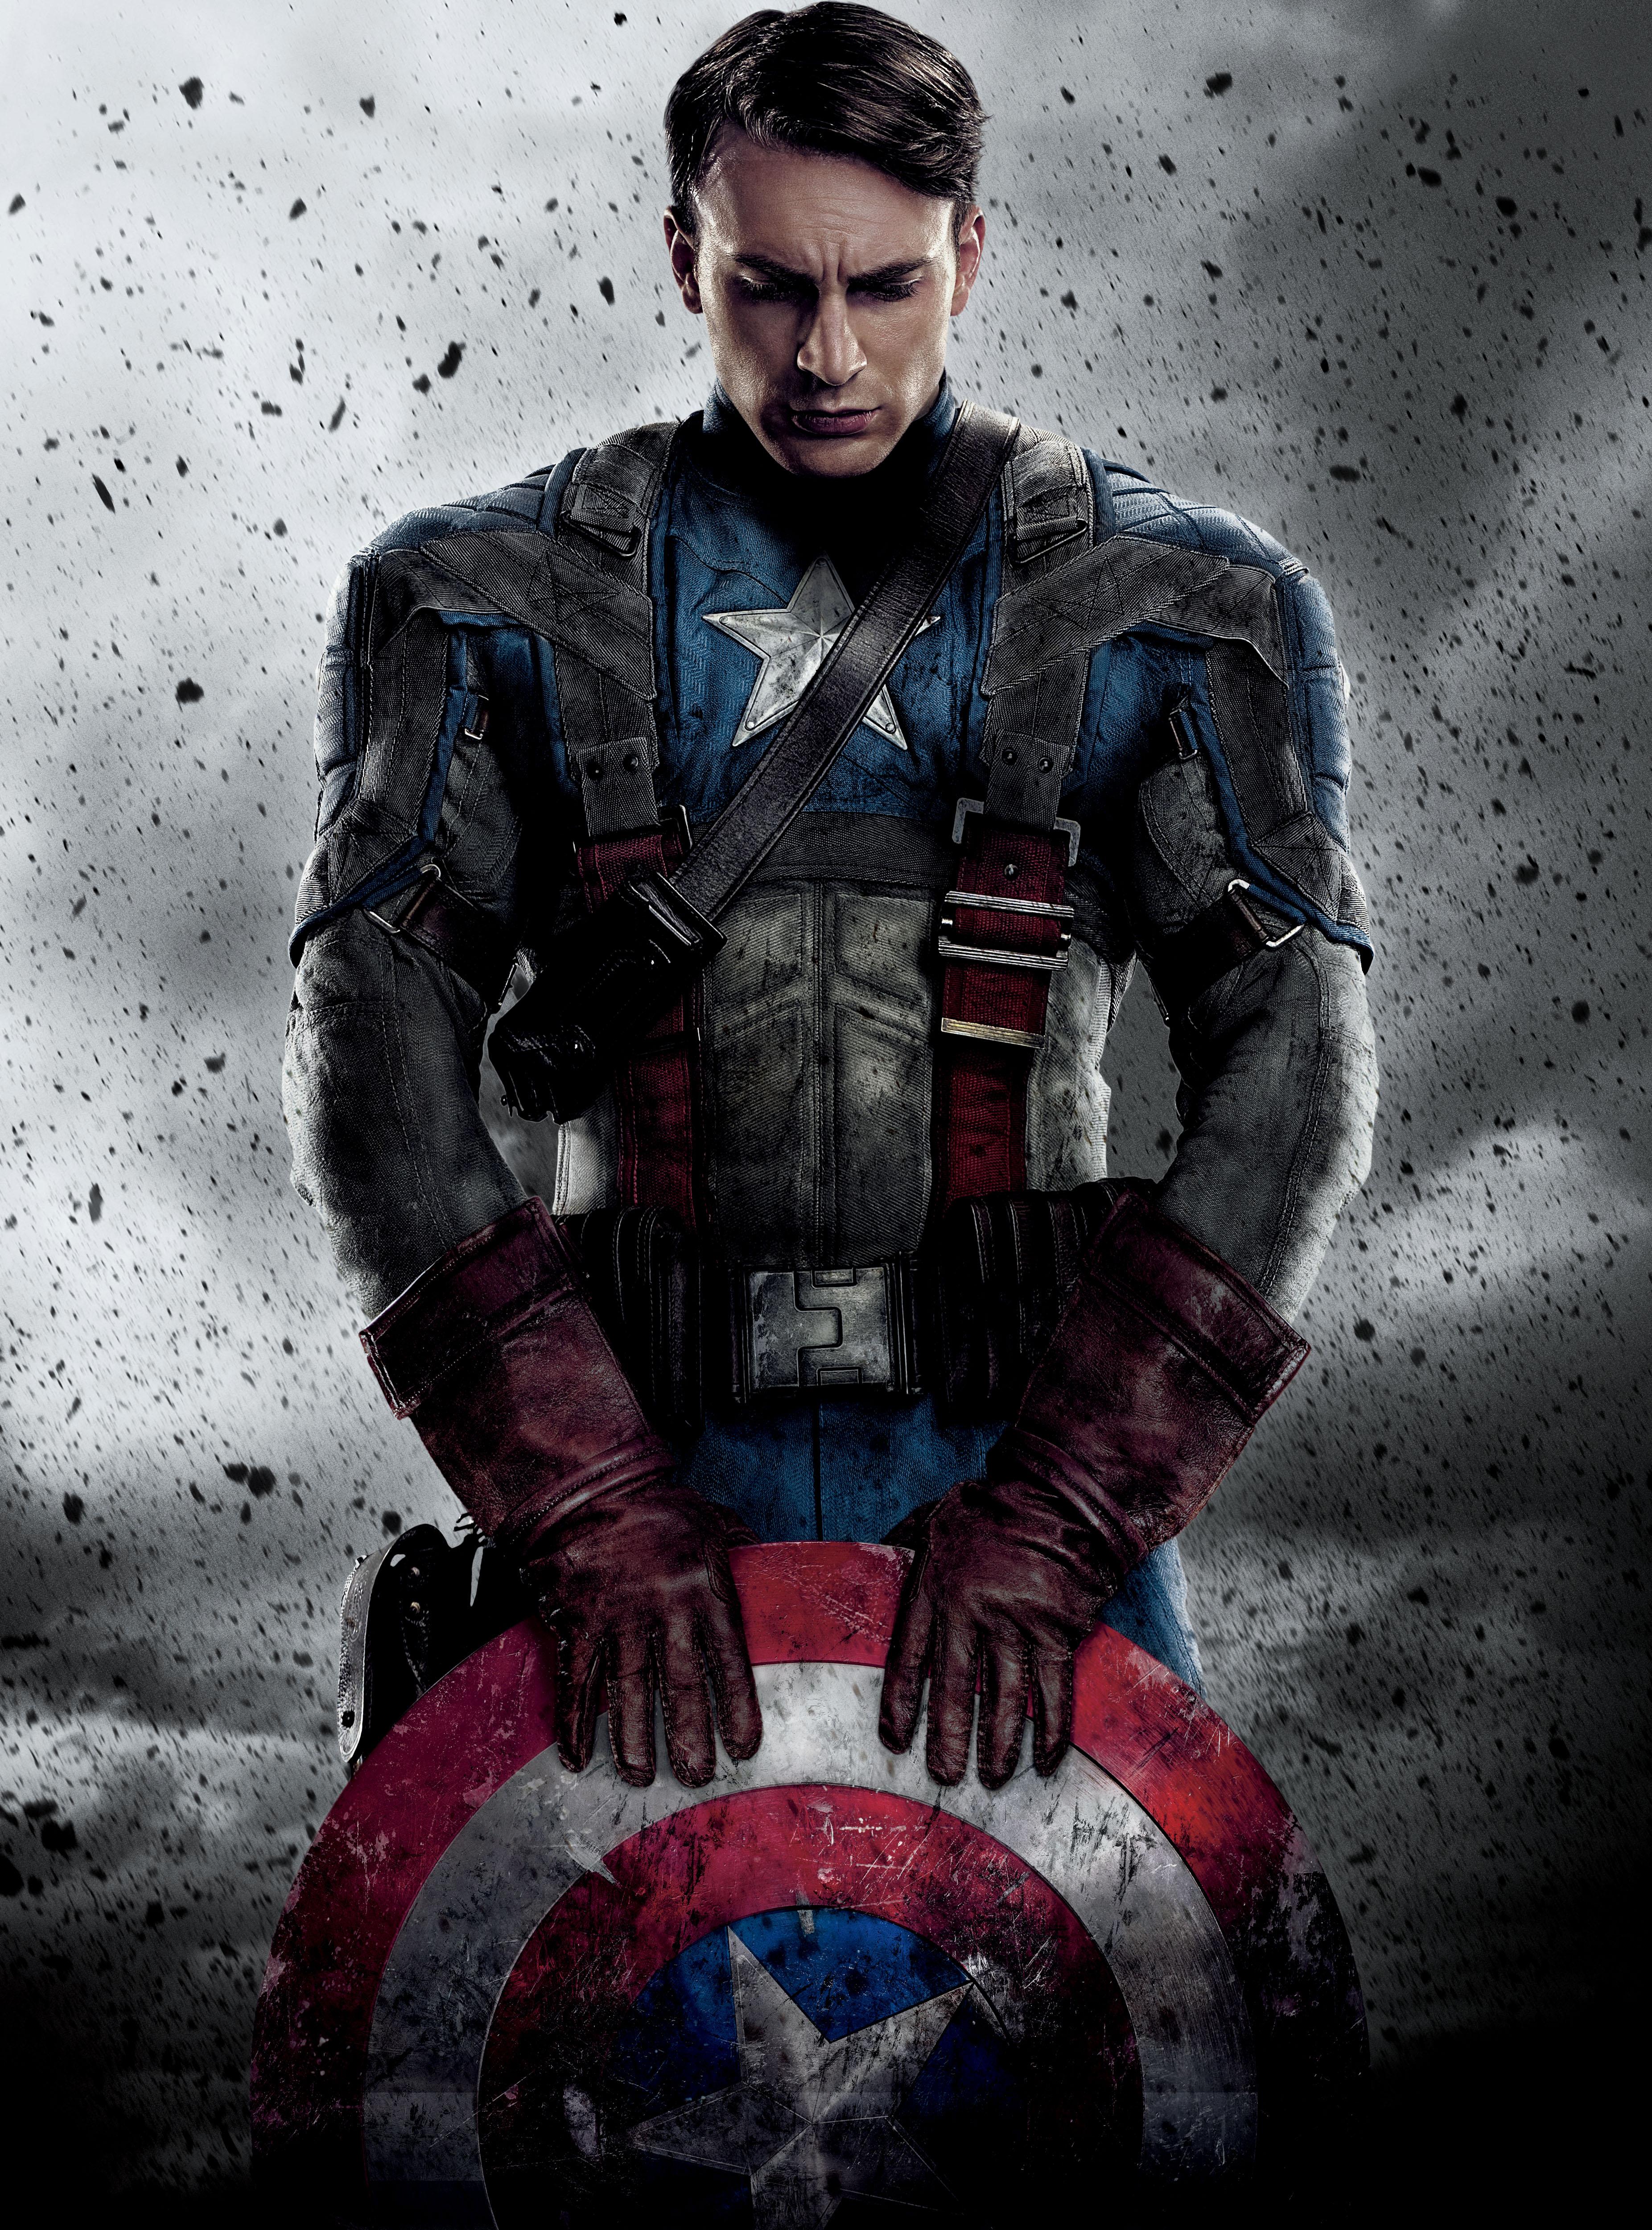 Gallery For > Captain America The First Avenger Wallpaper